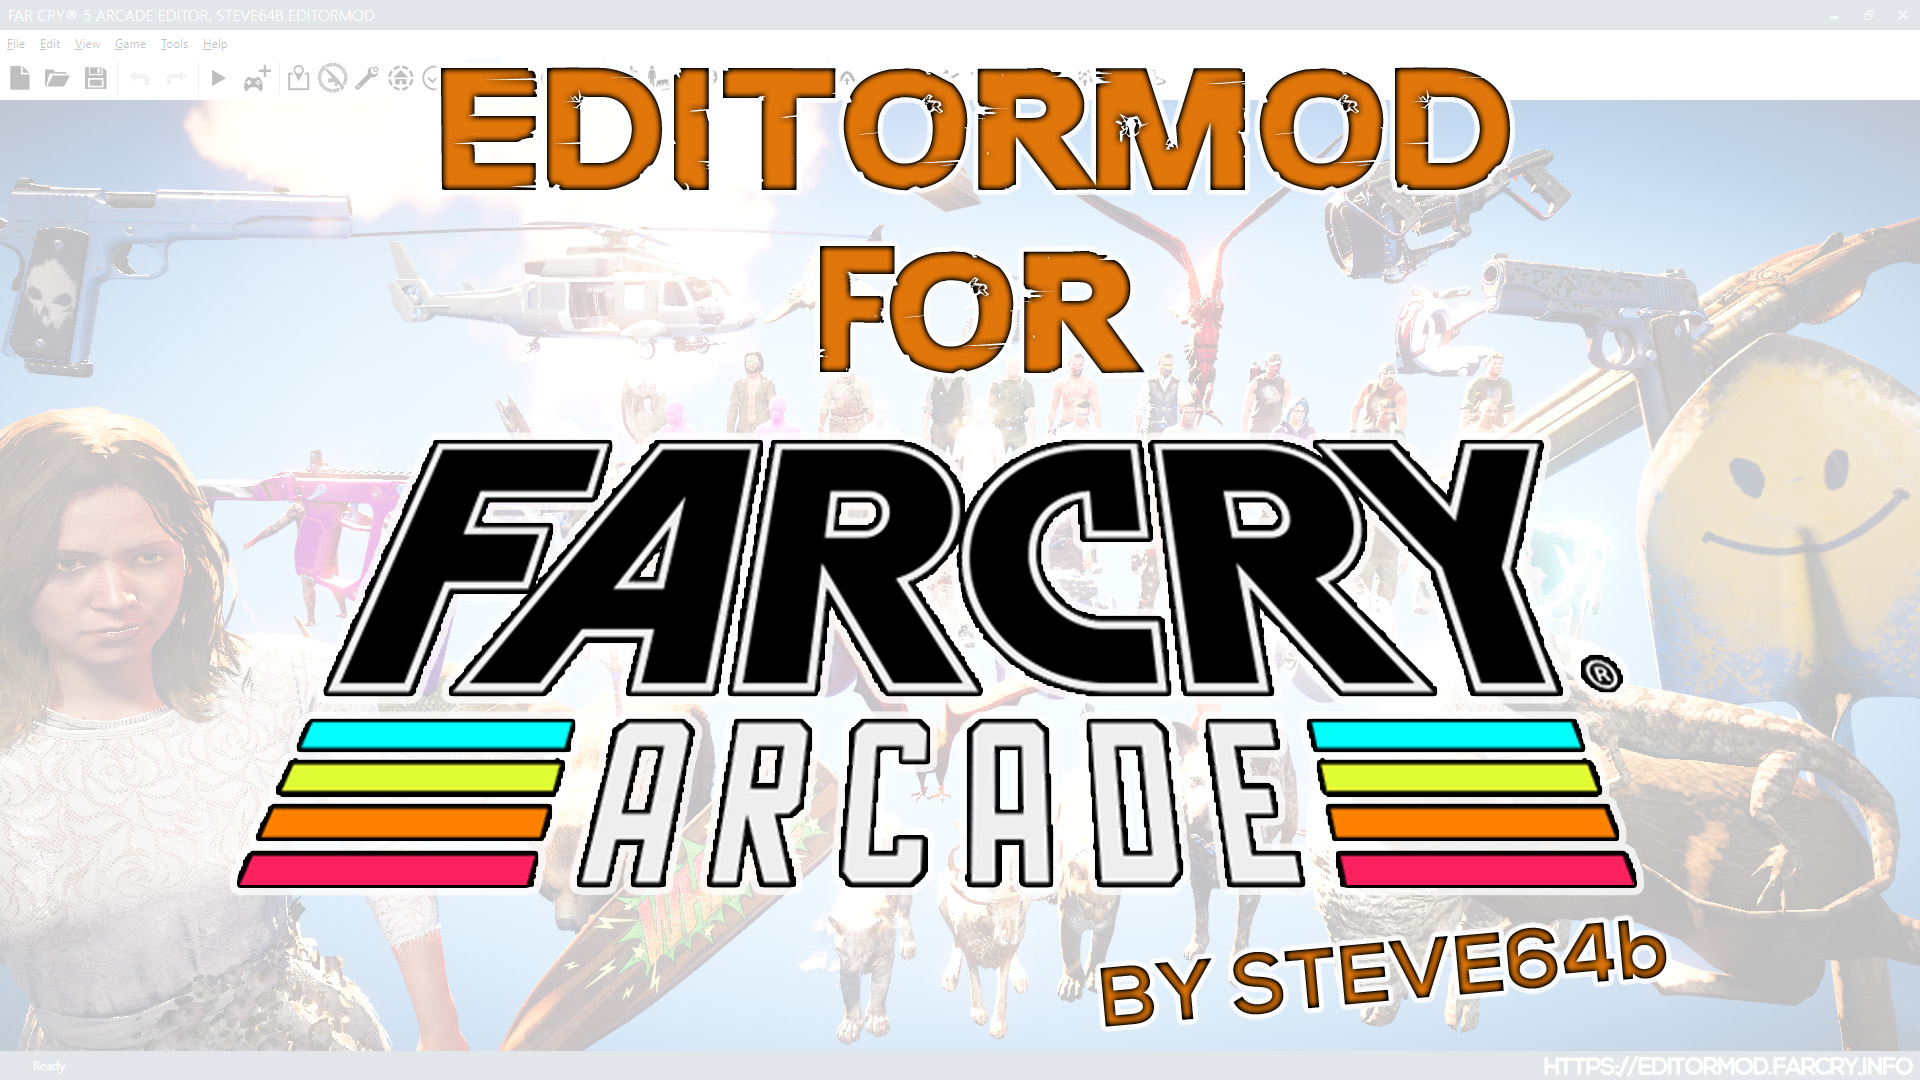 Far Cry 5 Co-op, Far Cry Wiki